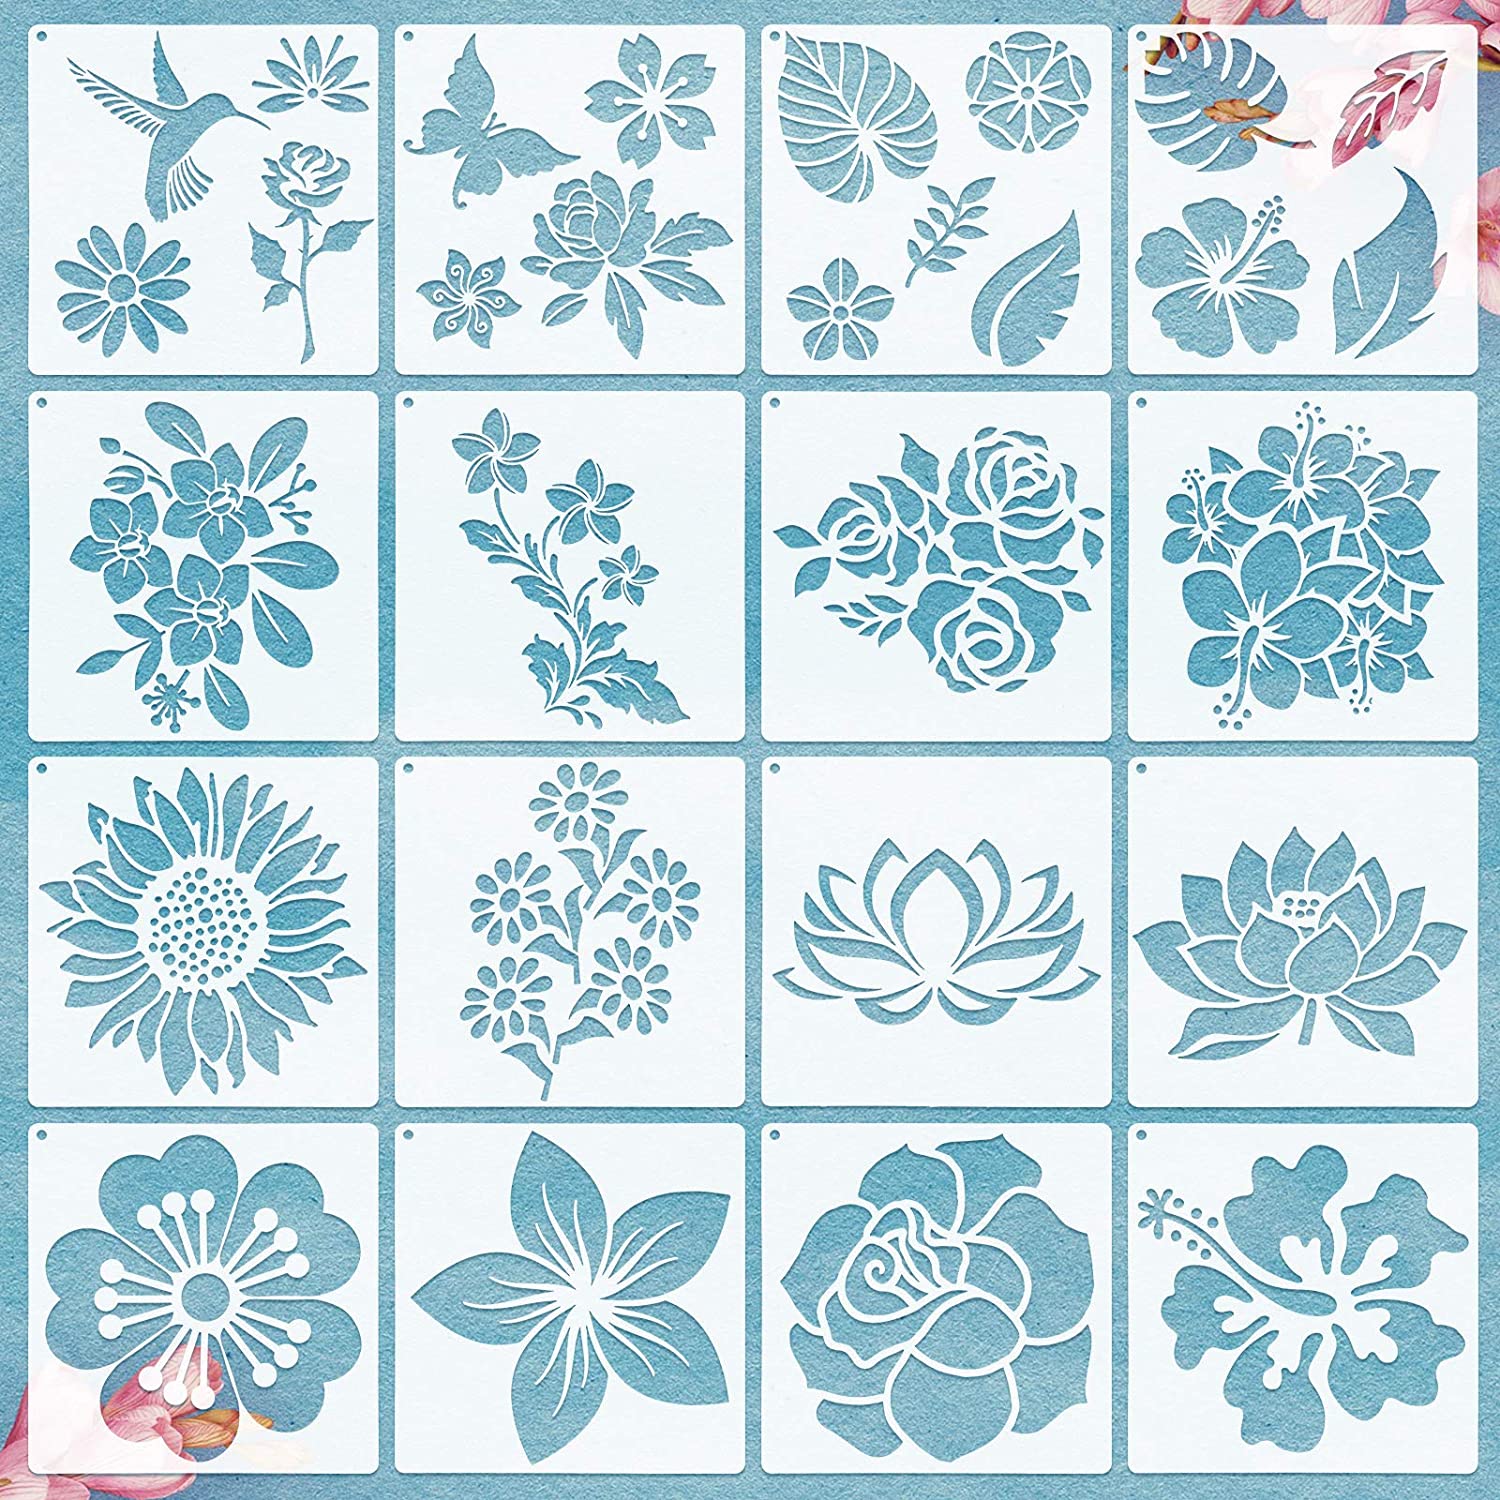 Zonon 6.3 x 6.3-Inch Floral Stencils & Templates, 16-Piece